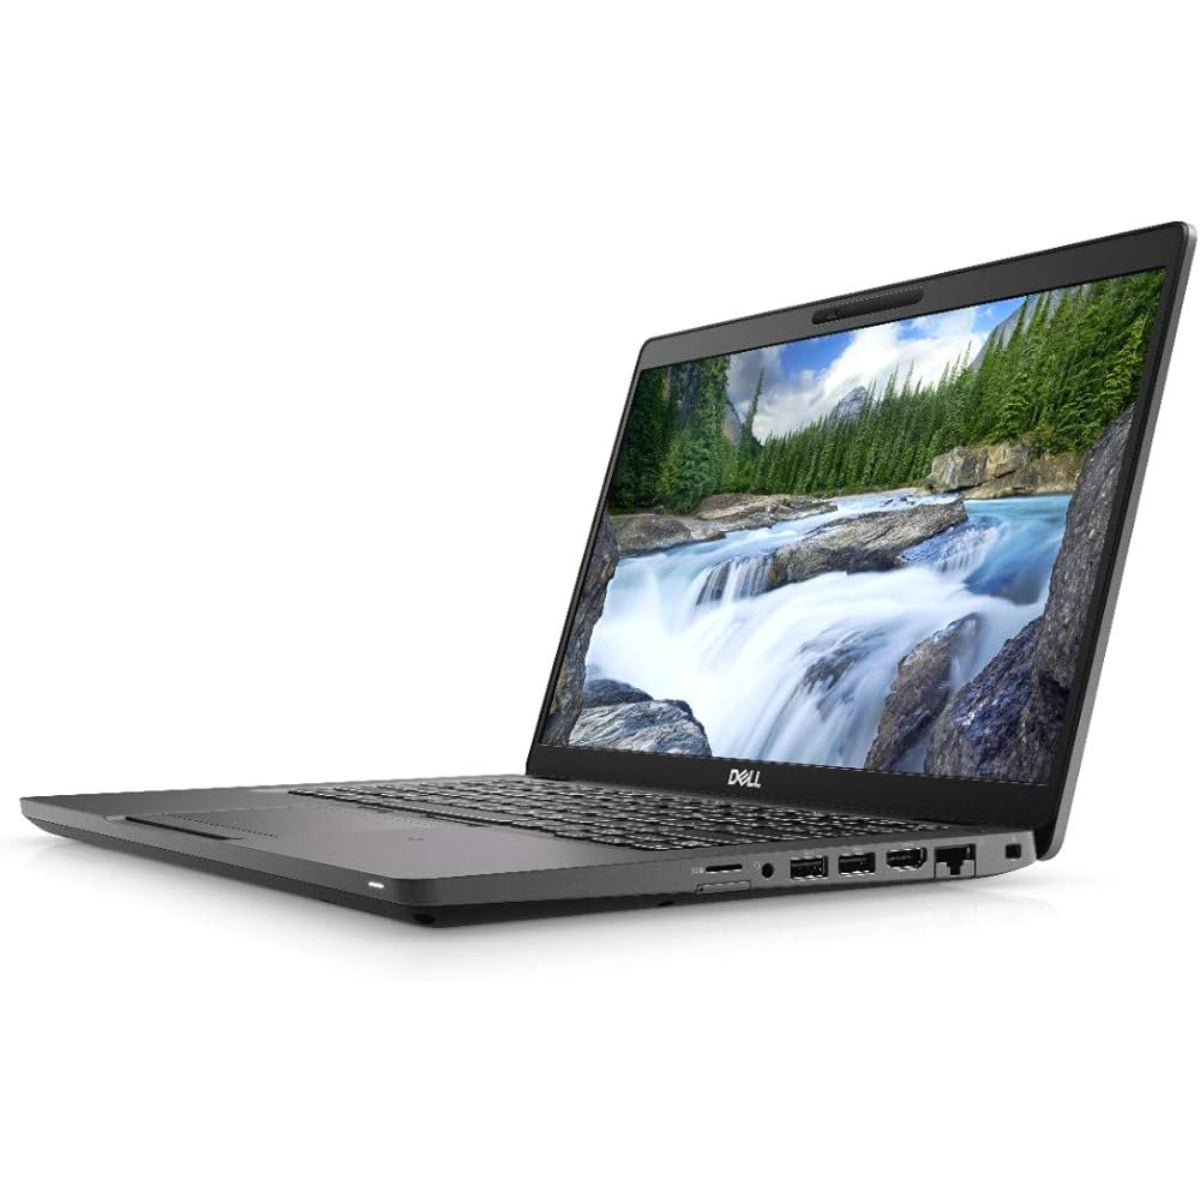 Dell Latitude 5400 I5 8th Gen 1.6 Ghz Quad Core Touchscreen Laptop